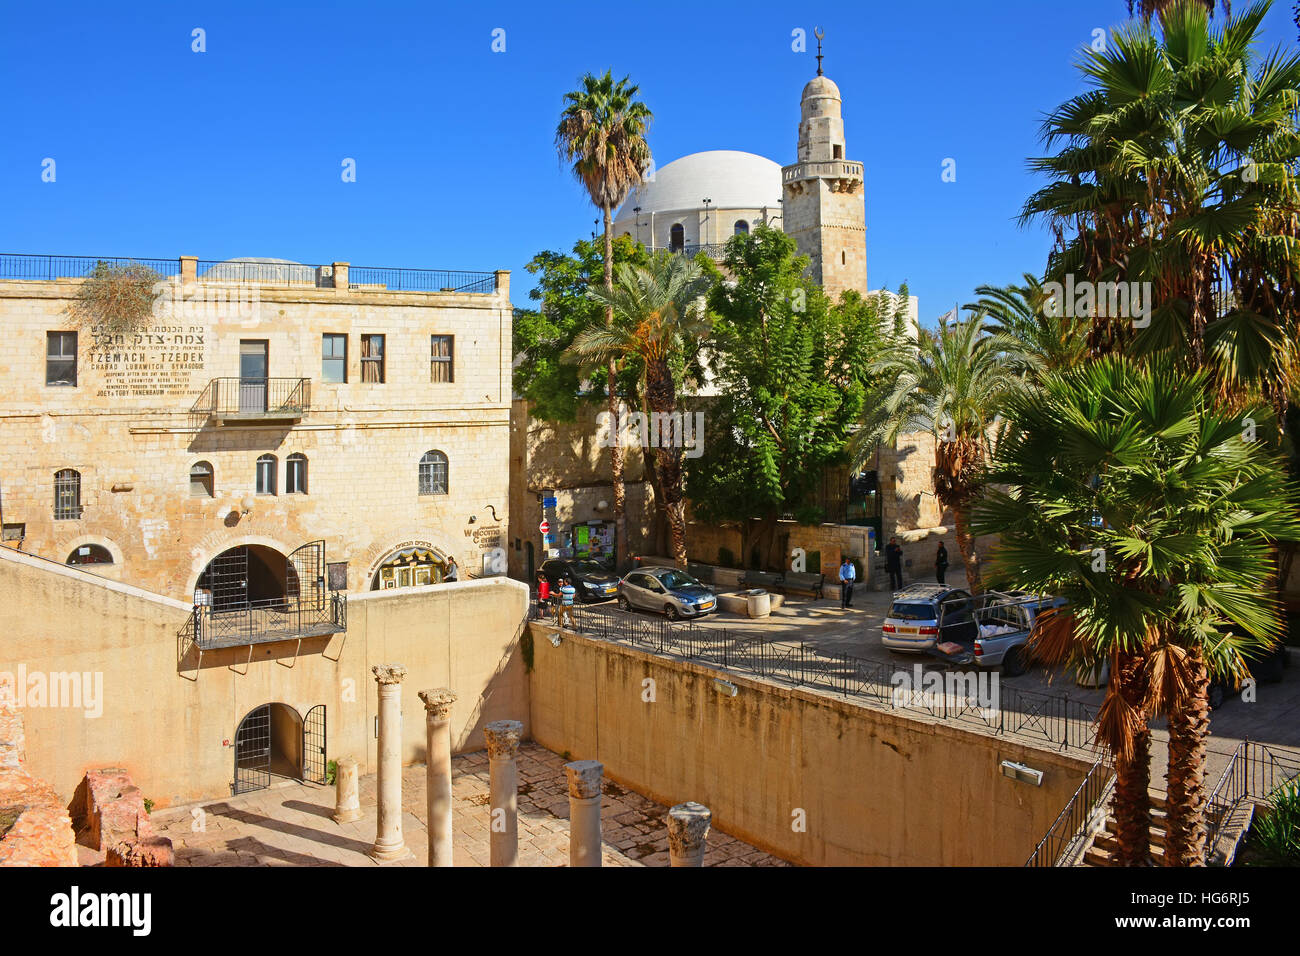 Old city - Kardo, Jerusalem, Israel Stock Photo